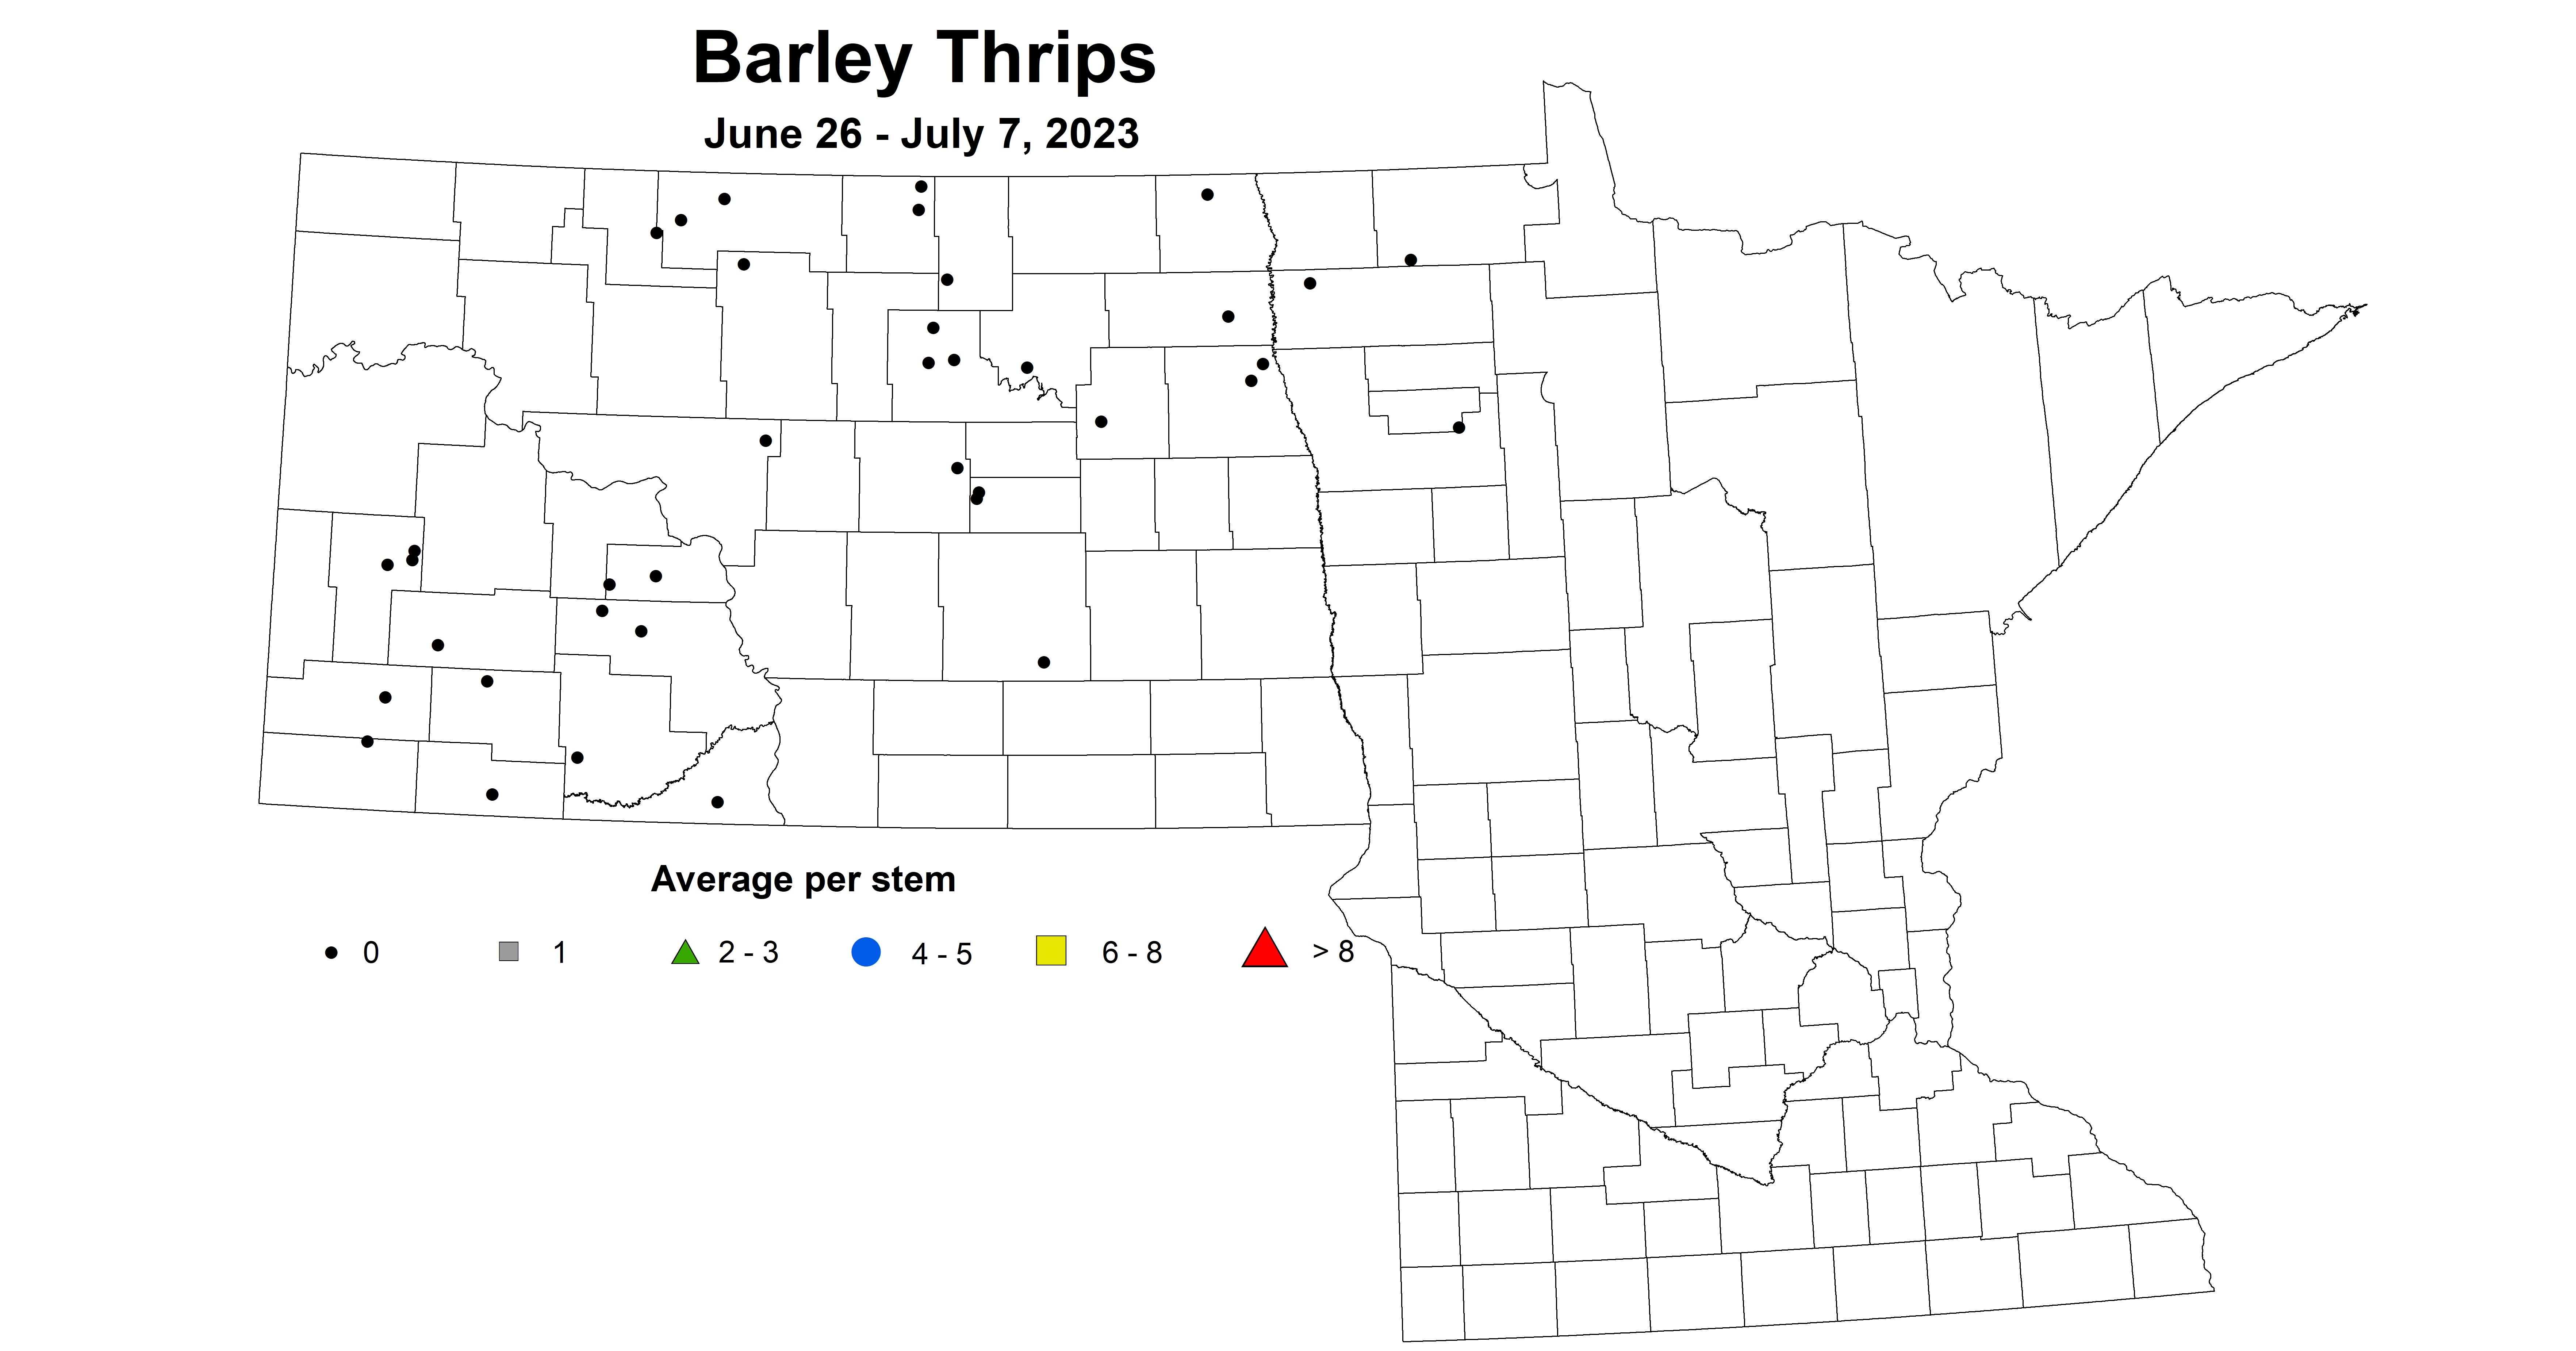 barley thrips June 26 - July 7 2023